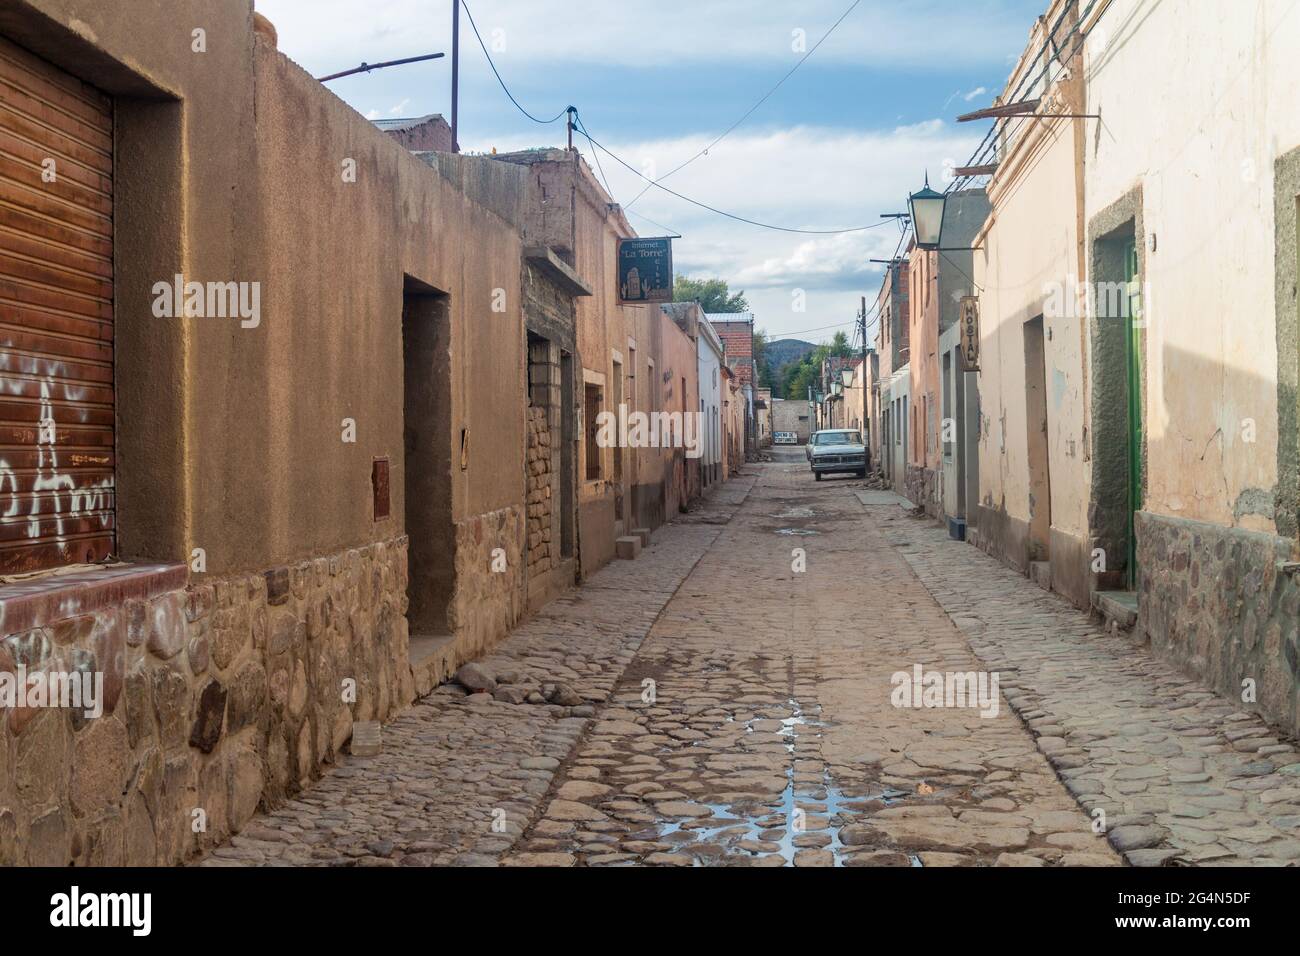 HUMAHUACA, ARGENTINA - APRIL 12, 2015: Cobbled street in Humahuaca village, Argentina Stock Photo